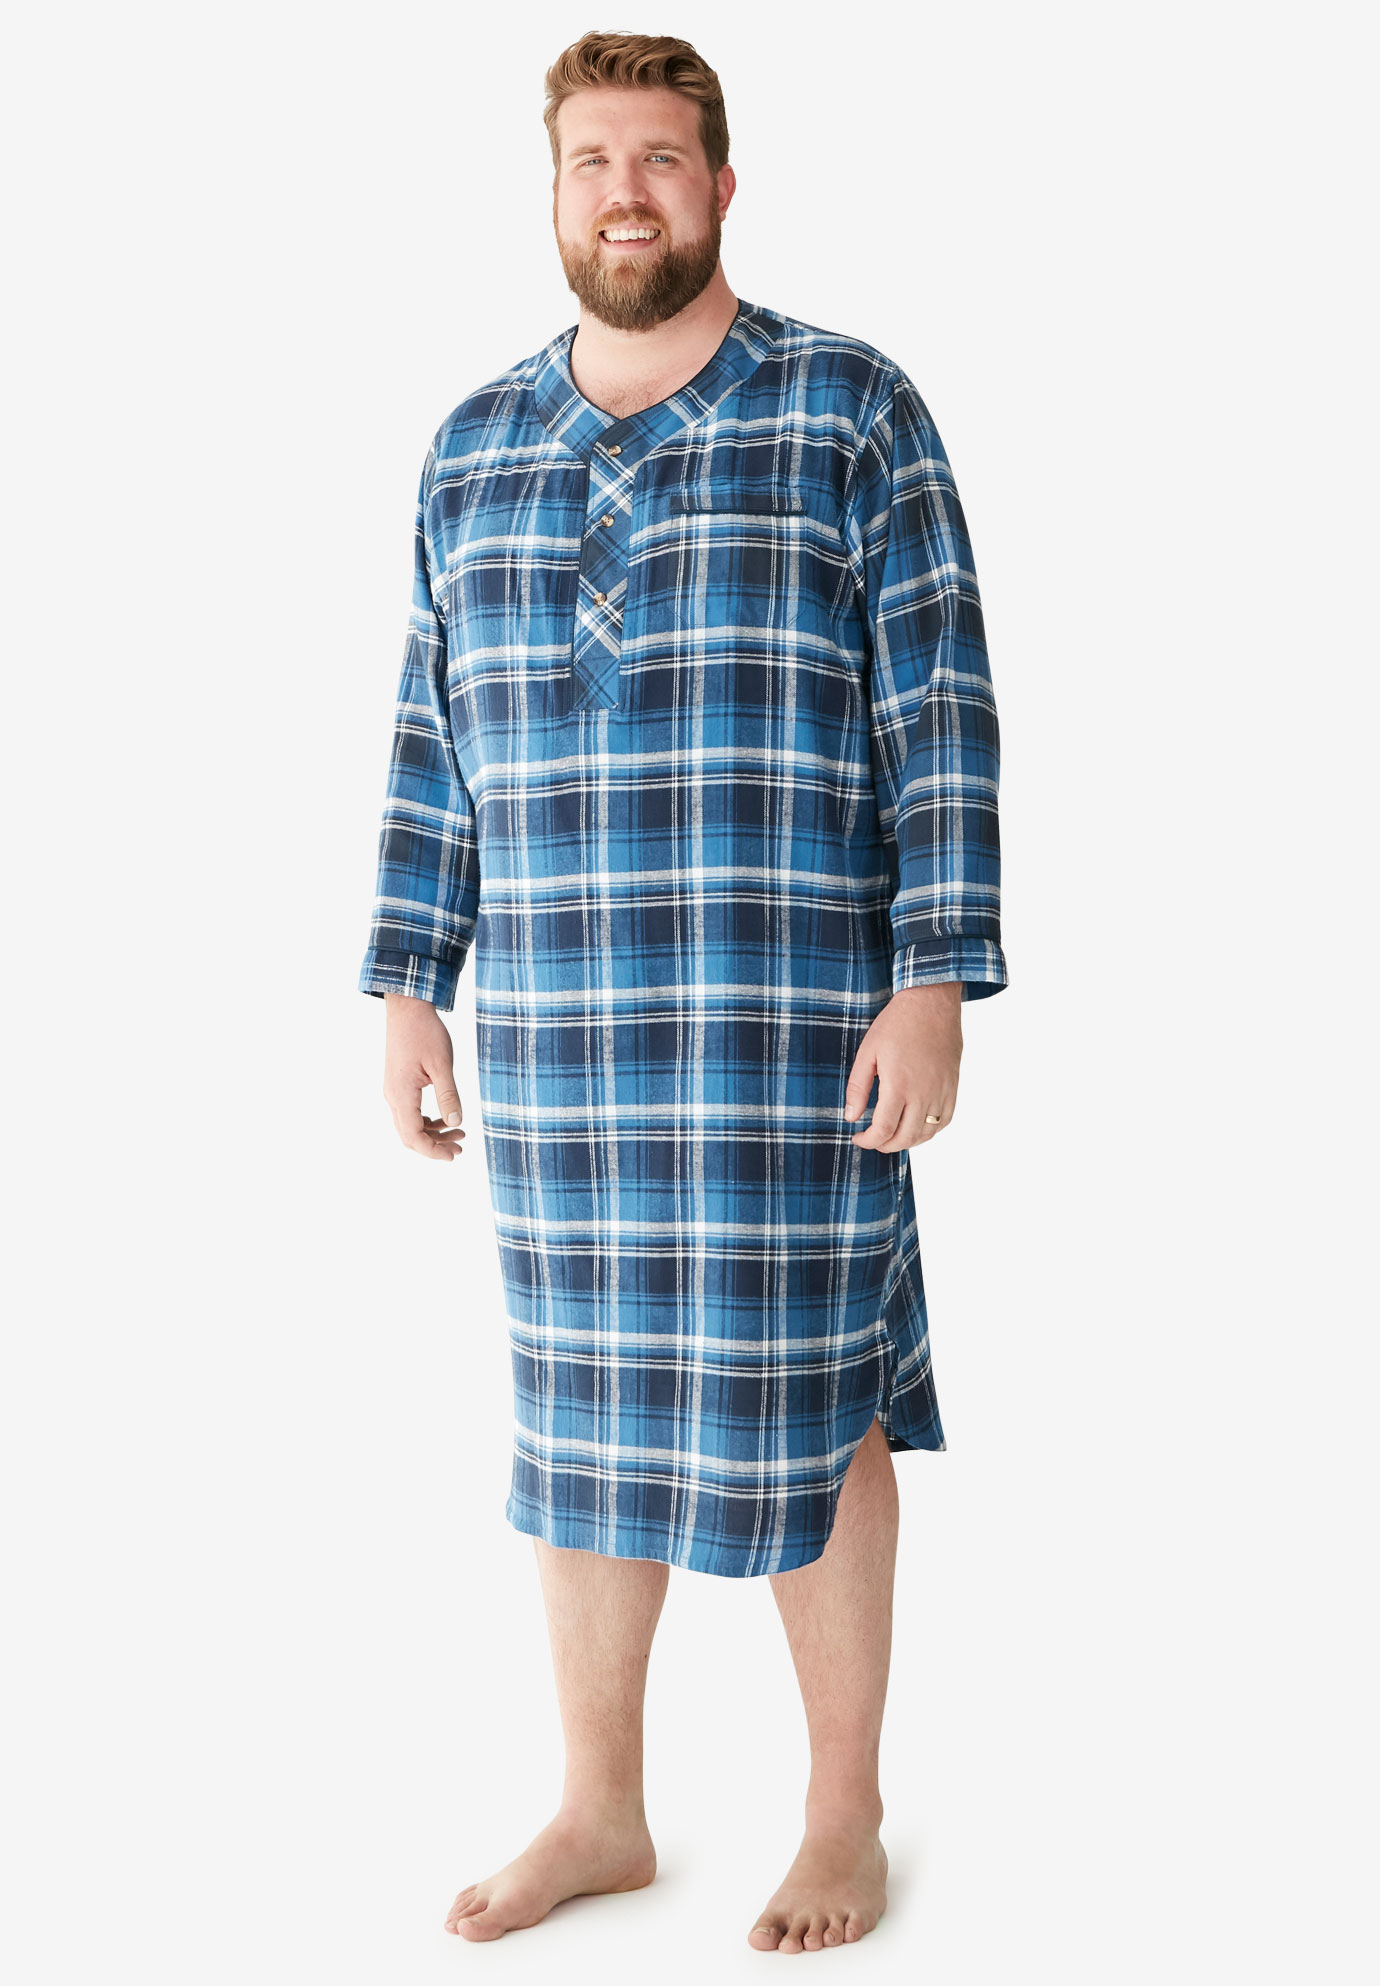 KingSize Men's Big & Tall Licensed Novelty Nightshirt Pajamas 